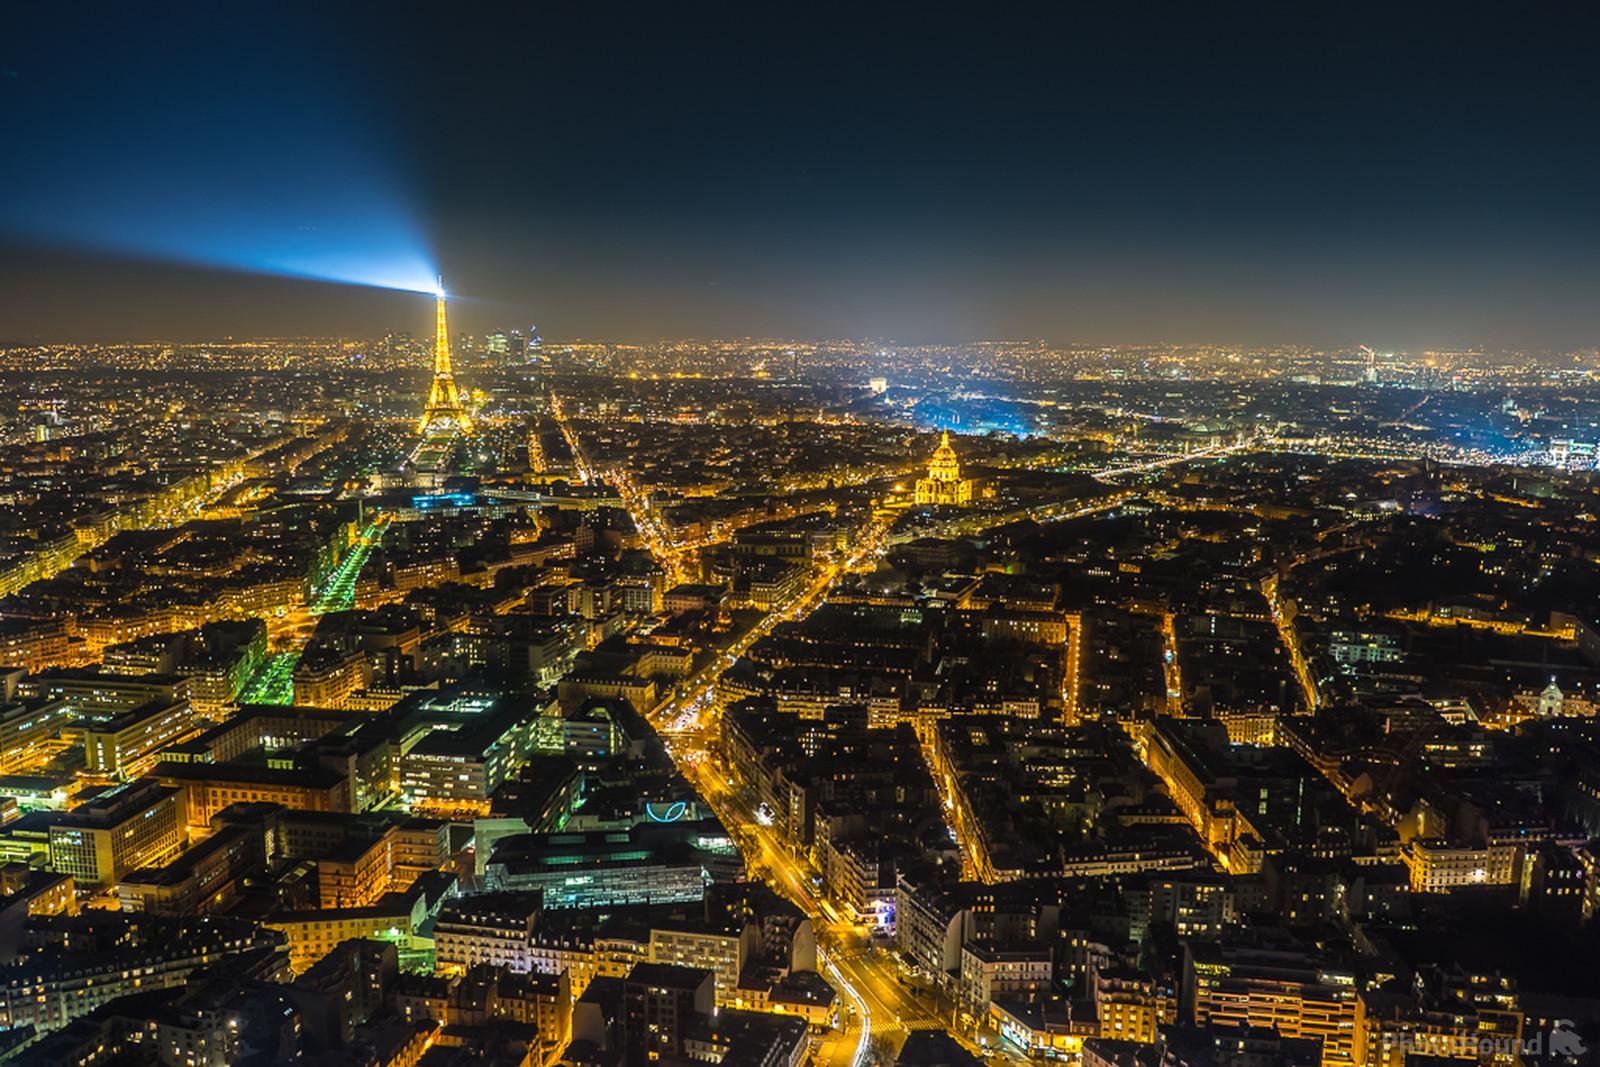 Image of Tour Montparnasse by JAMES BILLINGS